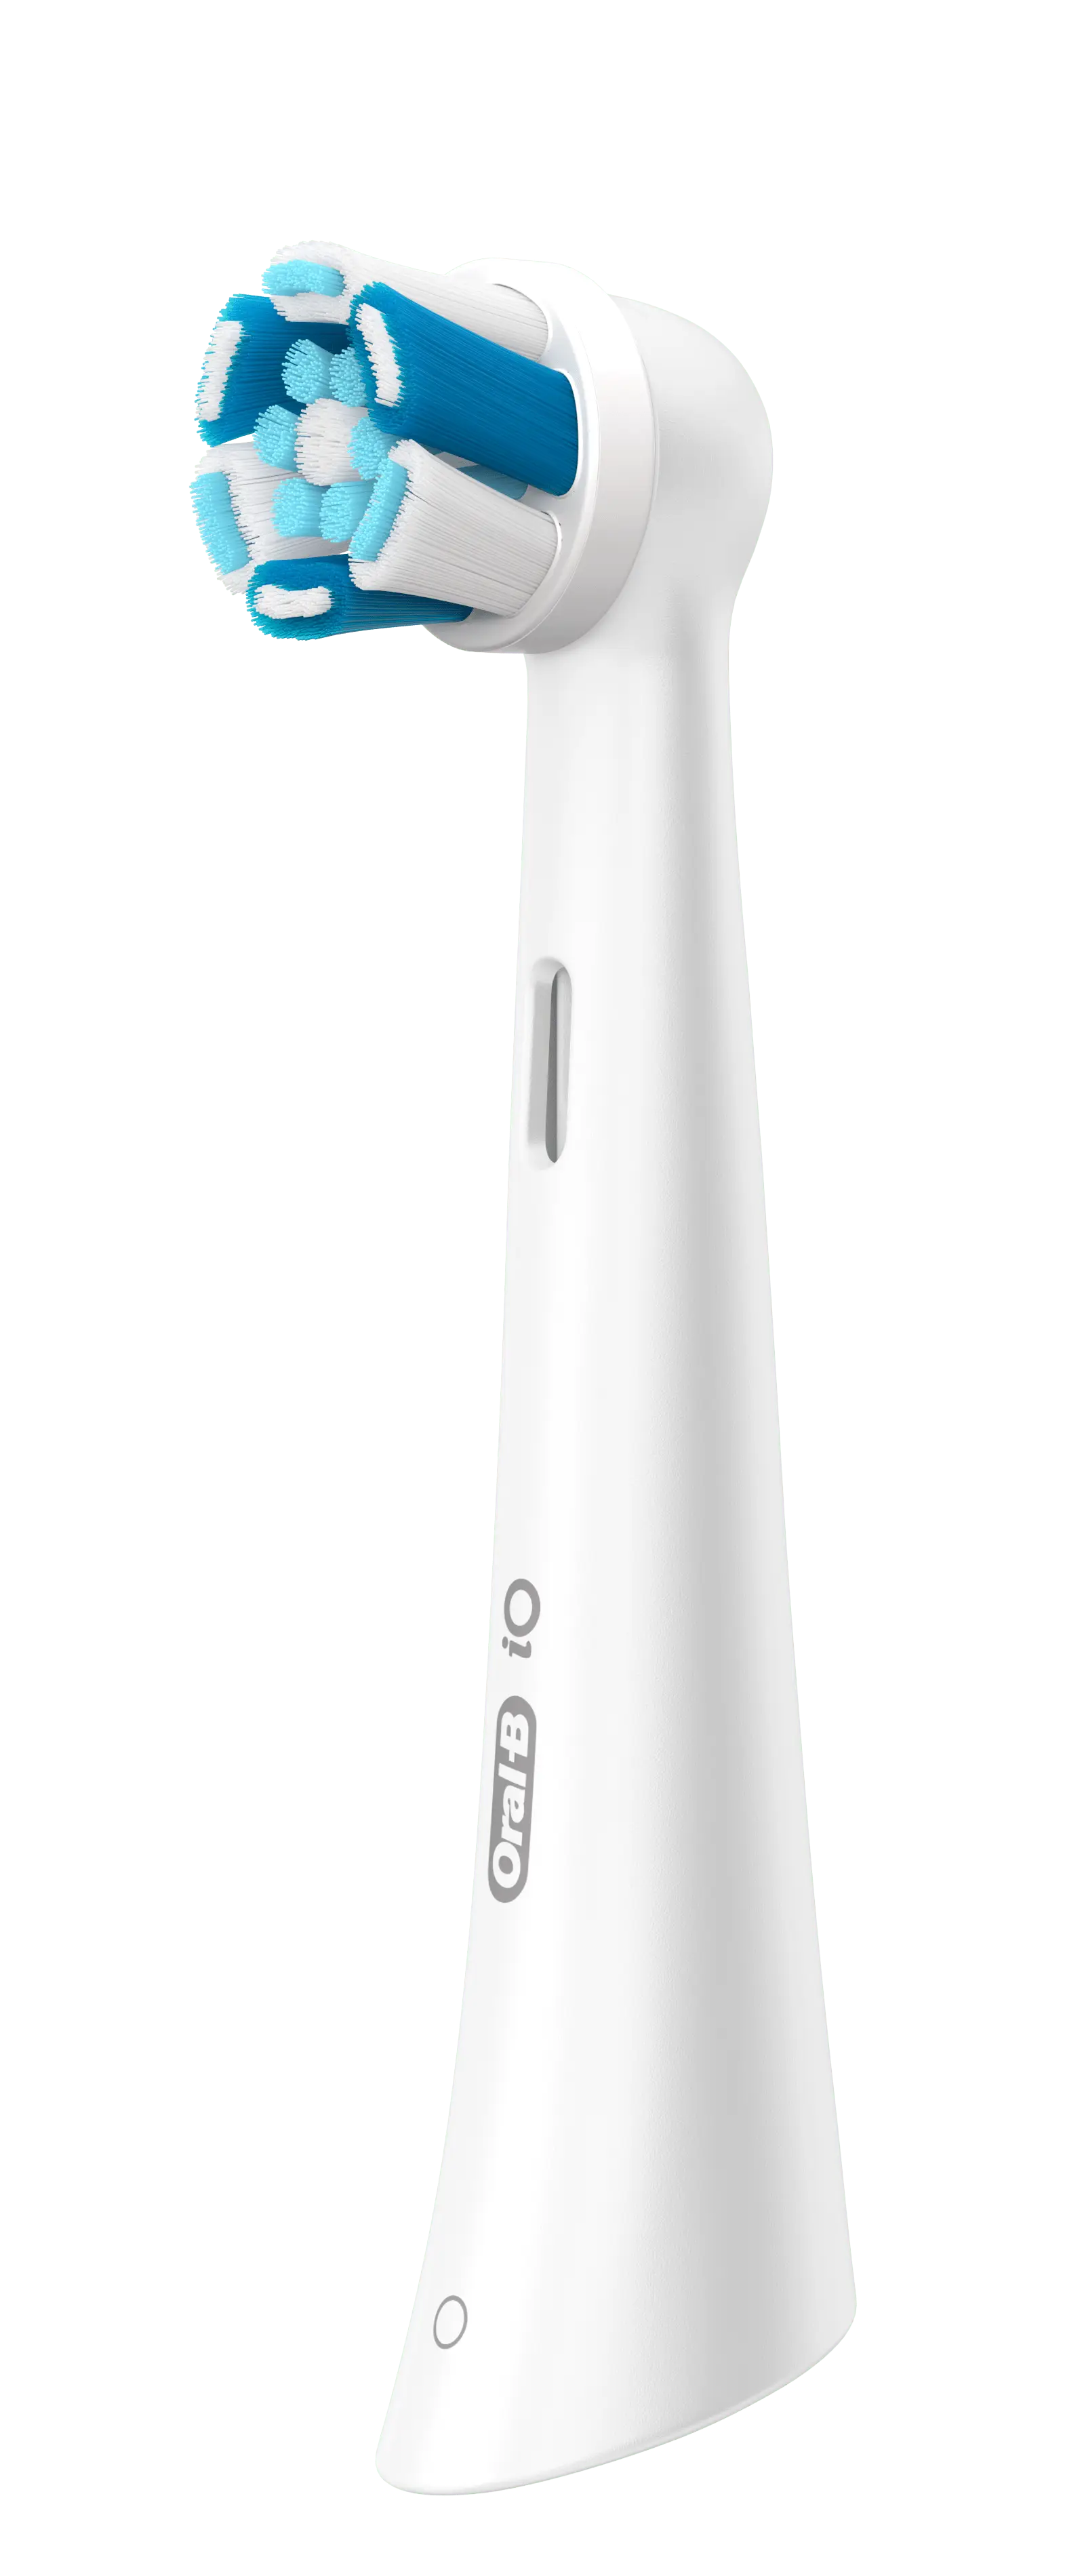 Oral-b iO Ultimate Clean 5th frame